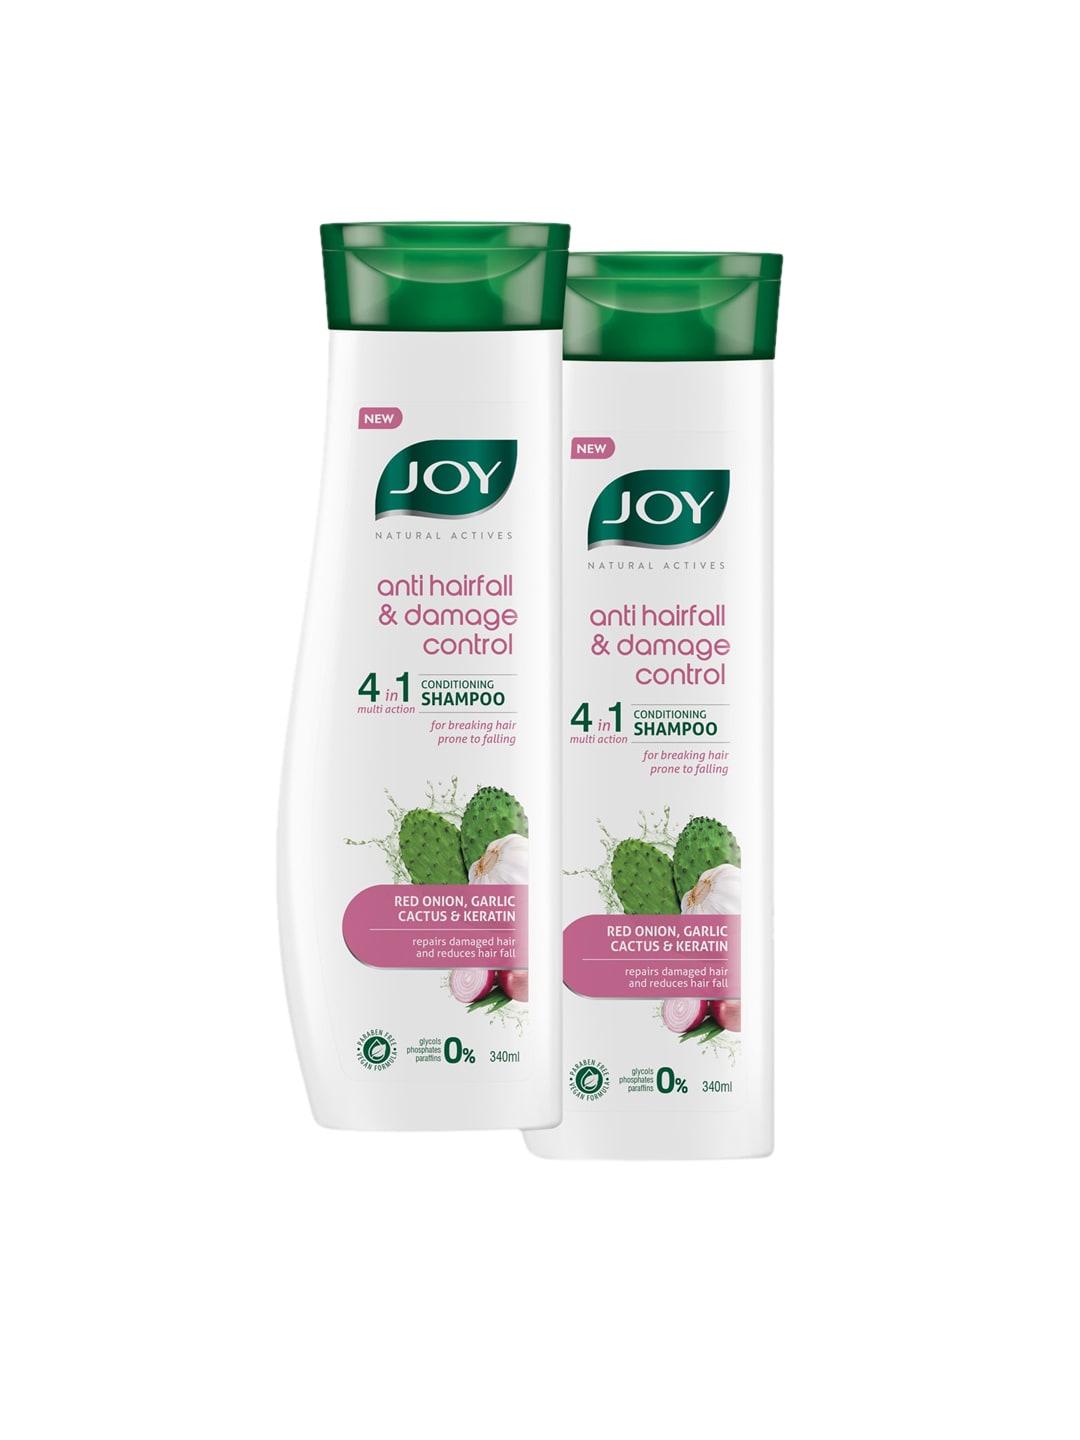 JOY Set Of 2 Natural Actives Anti-Hairfall & Damage Control 4-in-1 Shampoo - 340ml Each